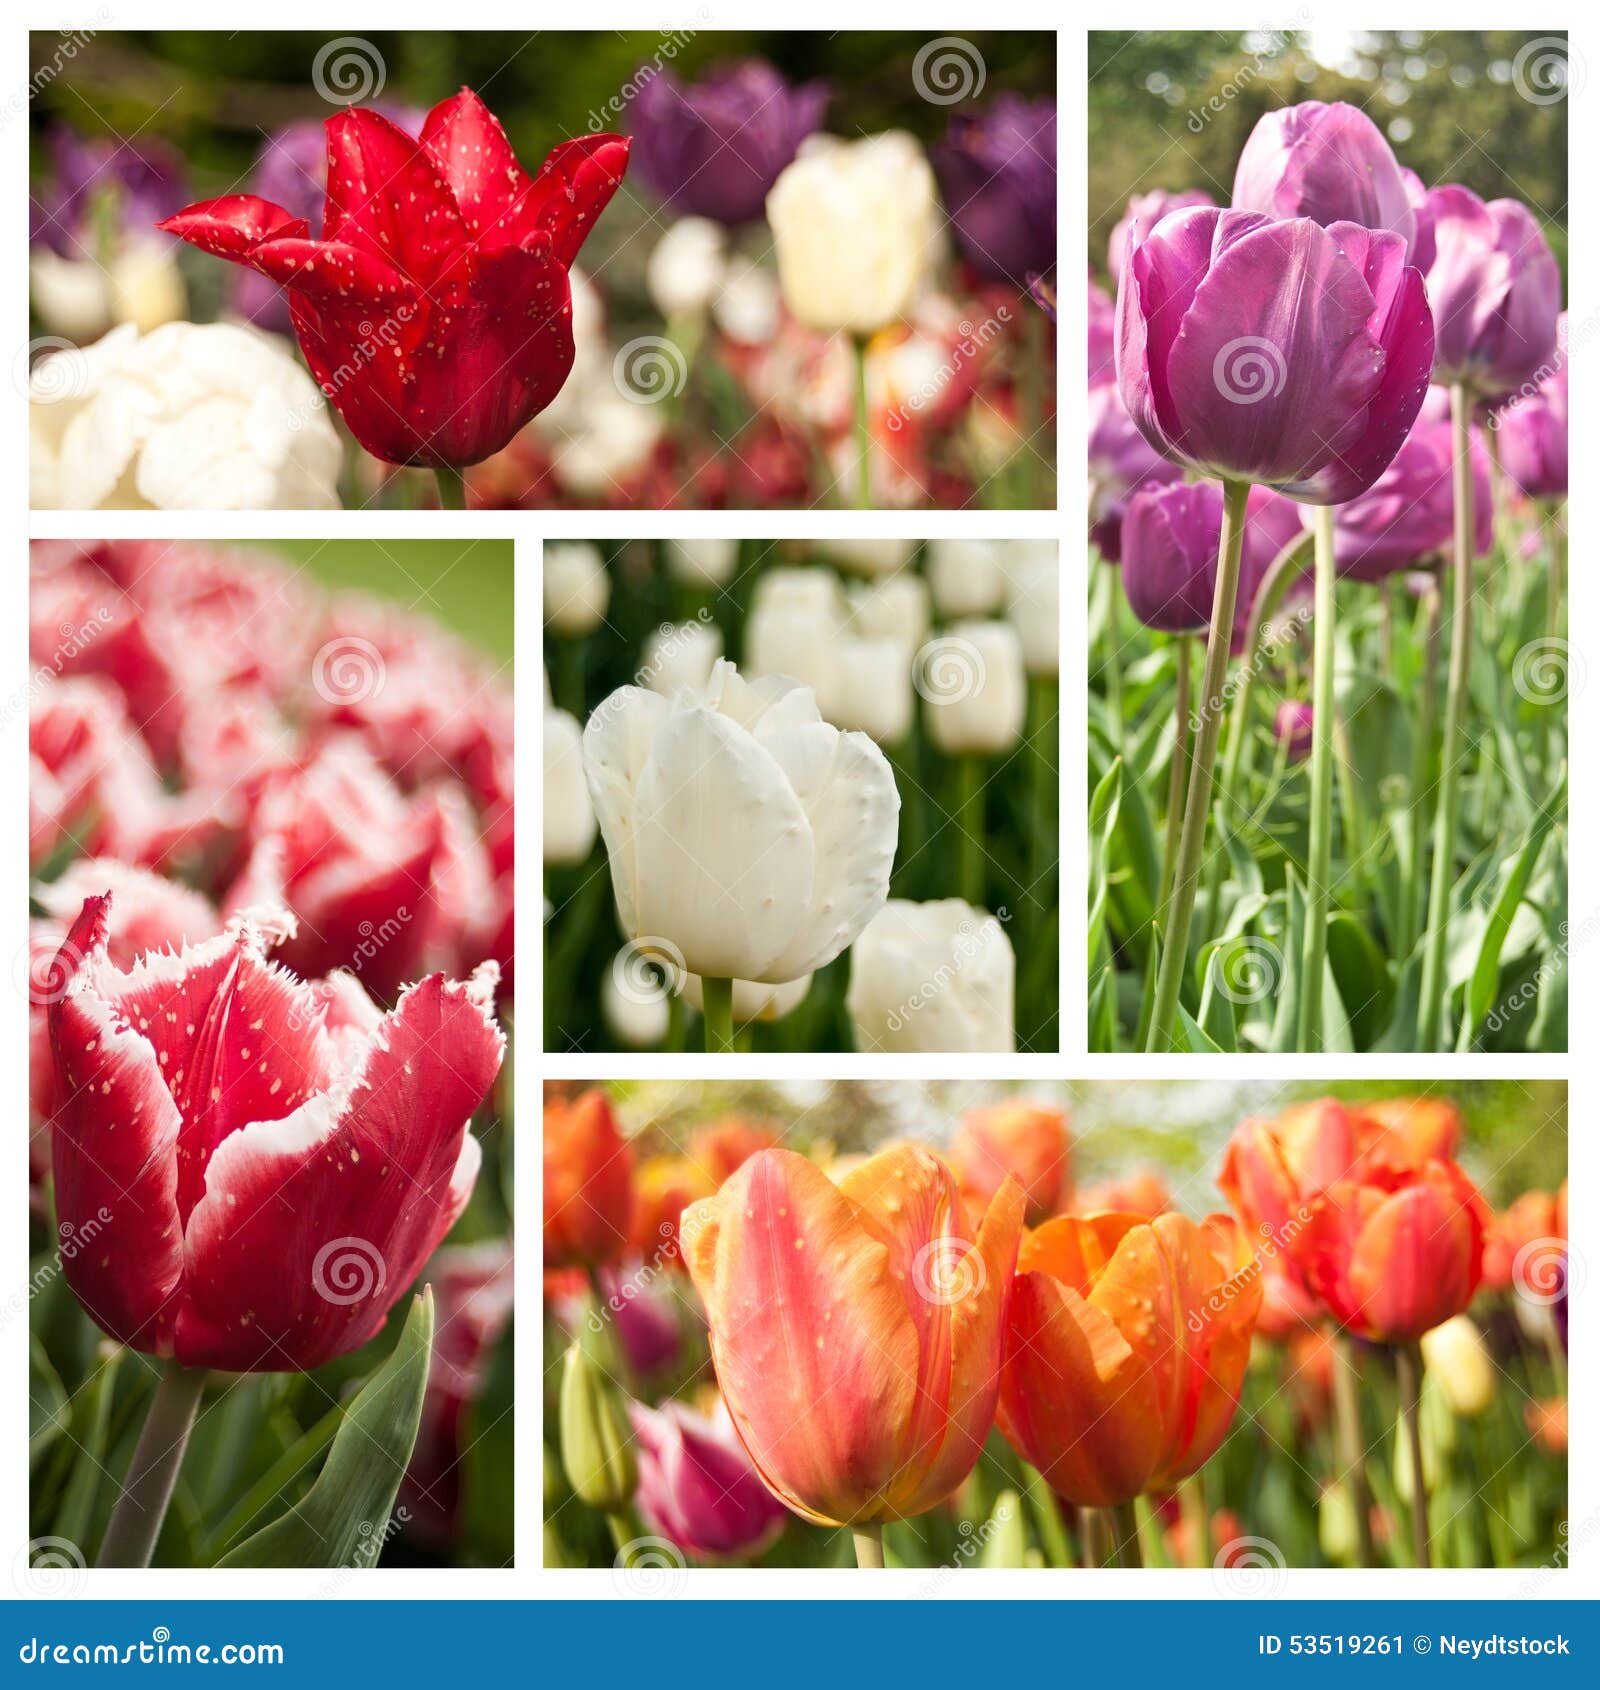 different vieuw of tulipes